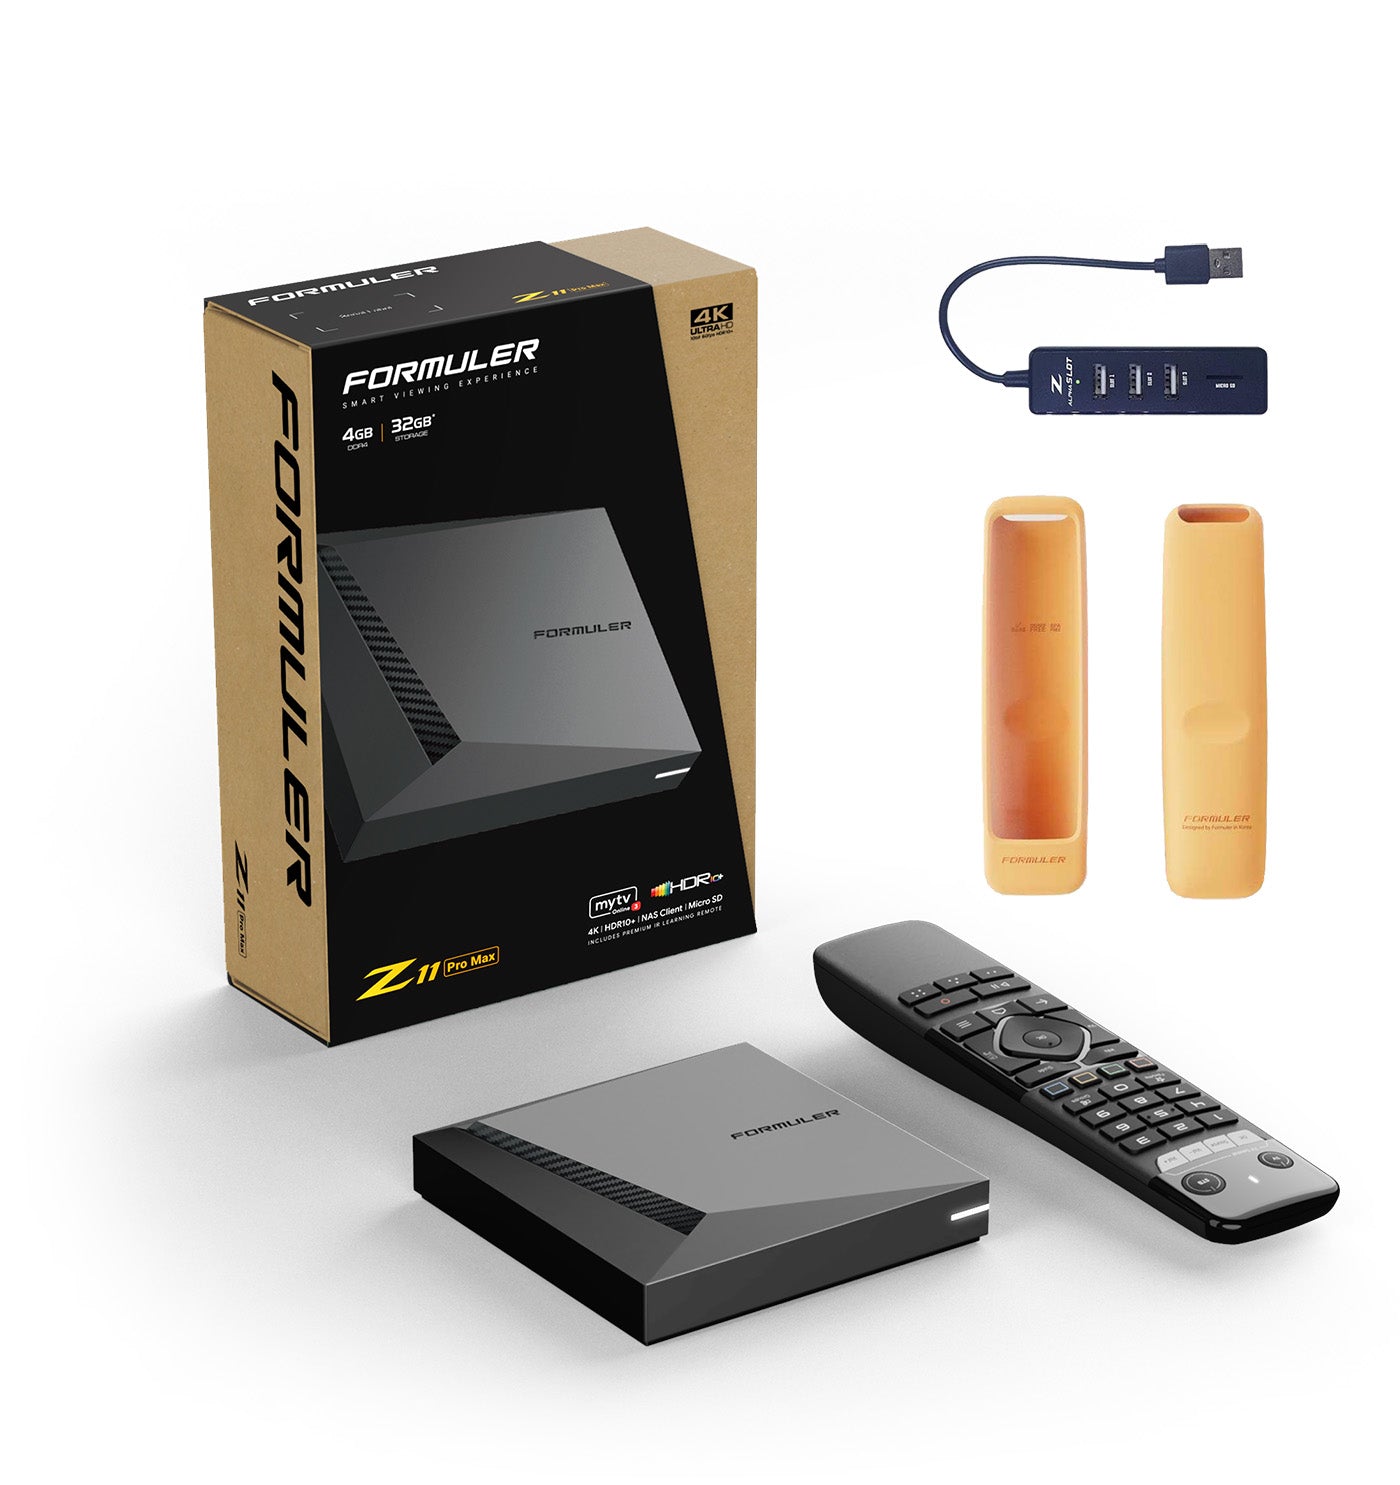 Formuler Z11 Pro Max + FREE ACCESSORIES: 1x orange remote cover + 1x USB Hub